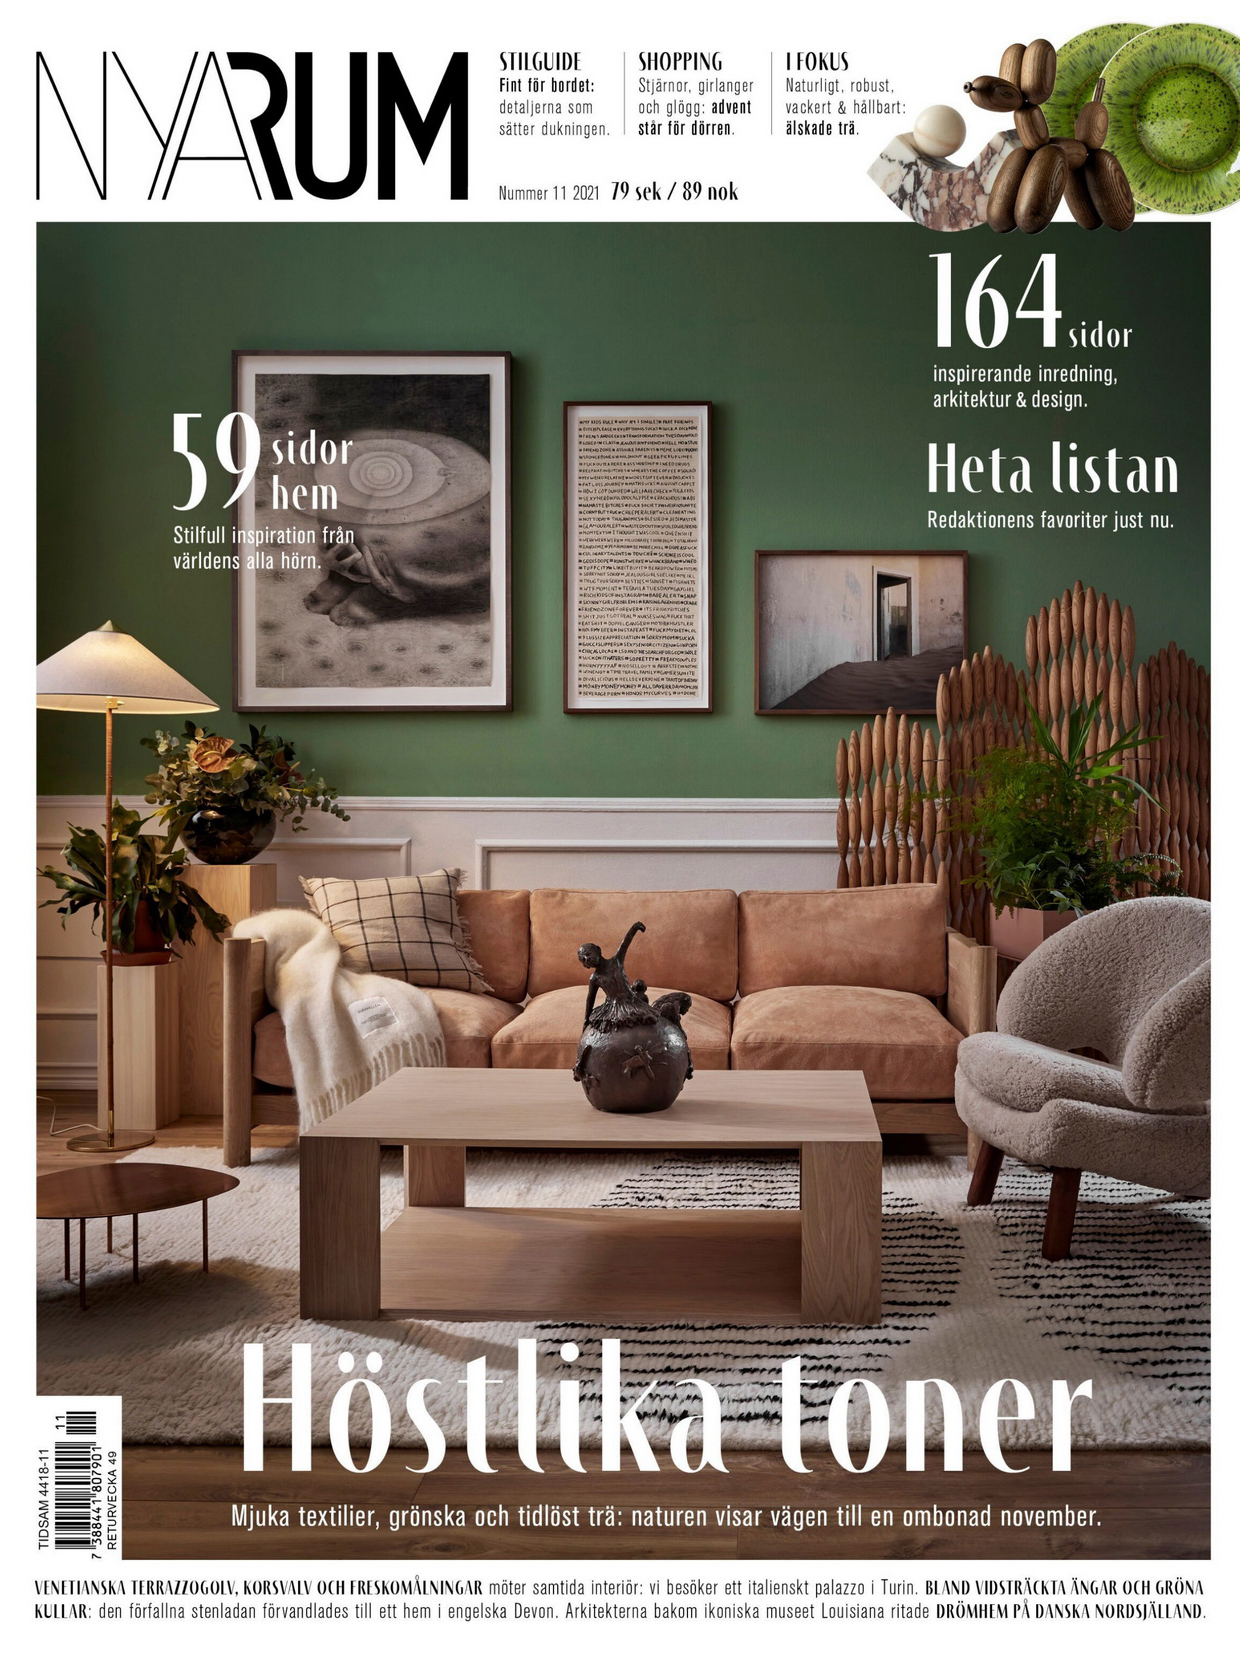 《Nya Rum》瑞典室内设计趋势杂志2021年11月号